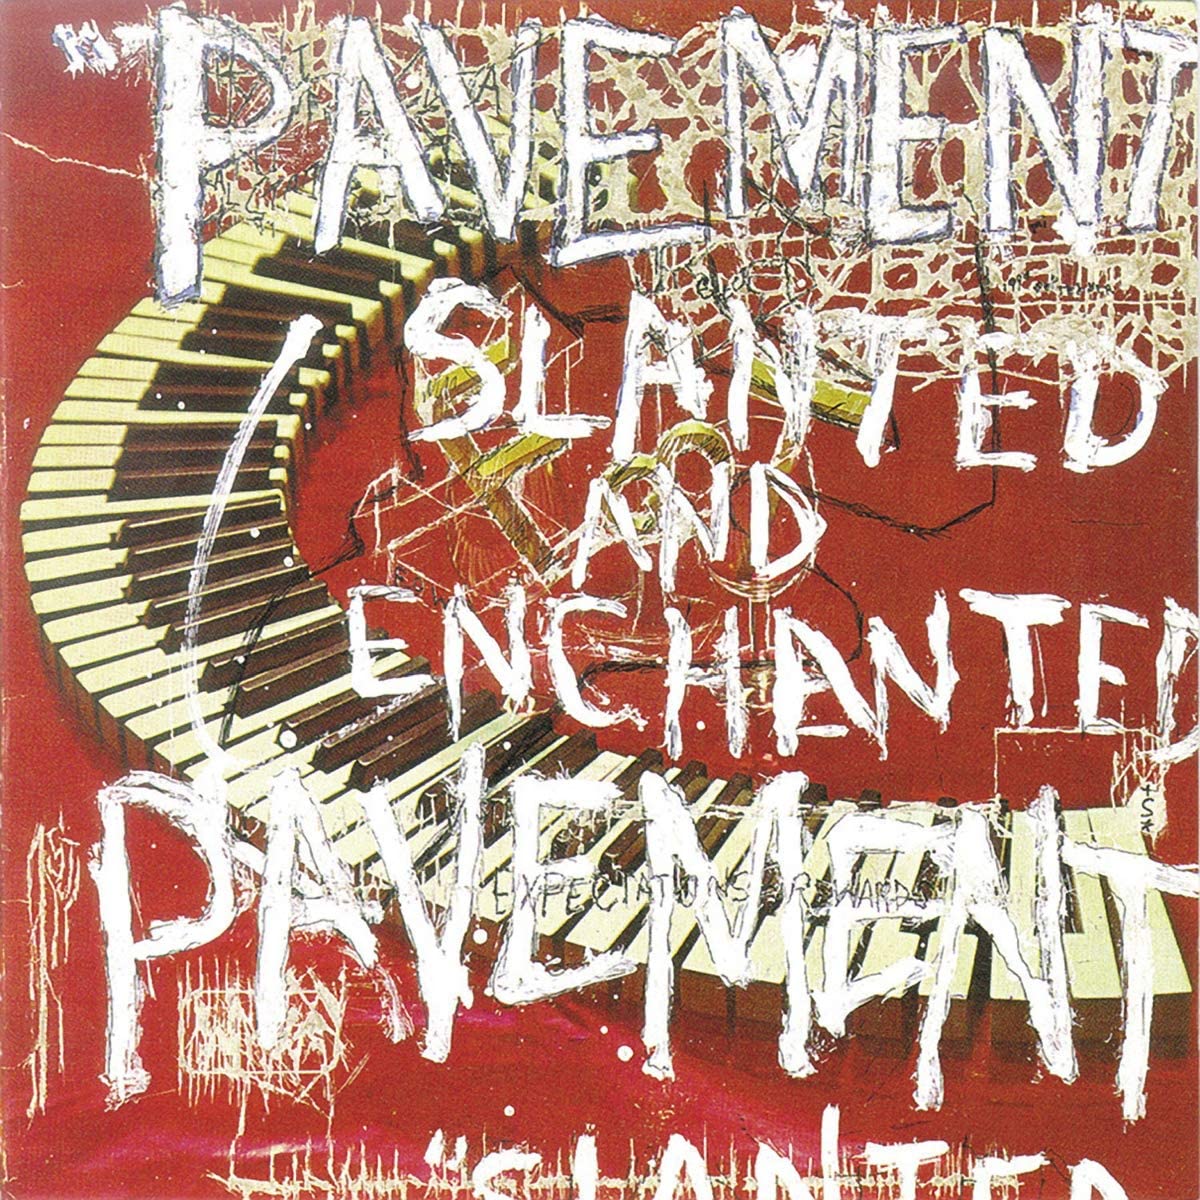 Pavement Slanted And Enchanted